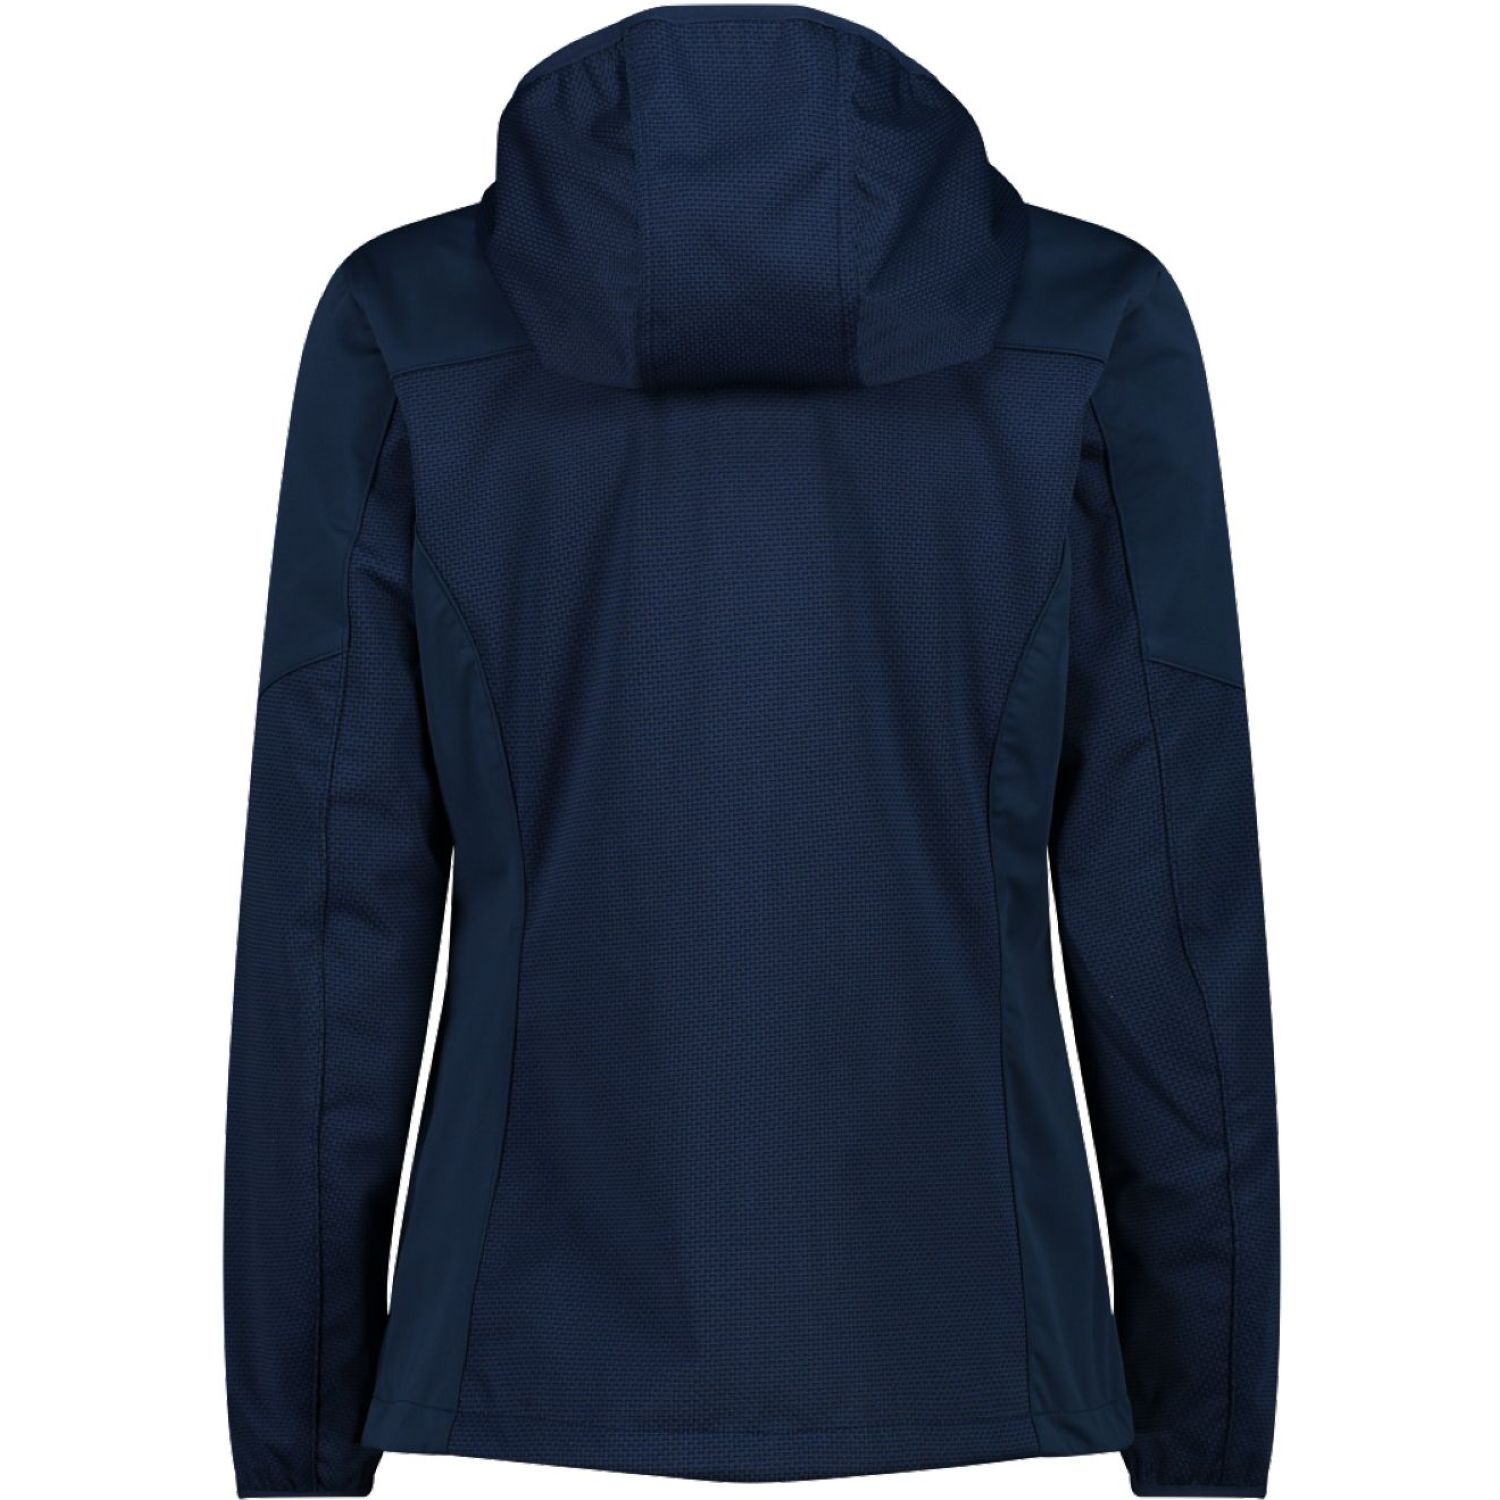 CMP Woman Jacket Fix Hood 33A5306 Softshelljacken blue jetzt bei Berger  kaufen